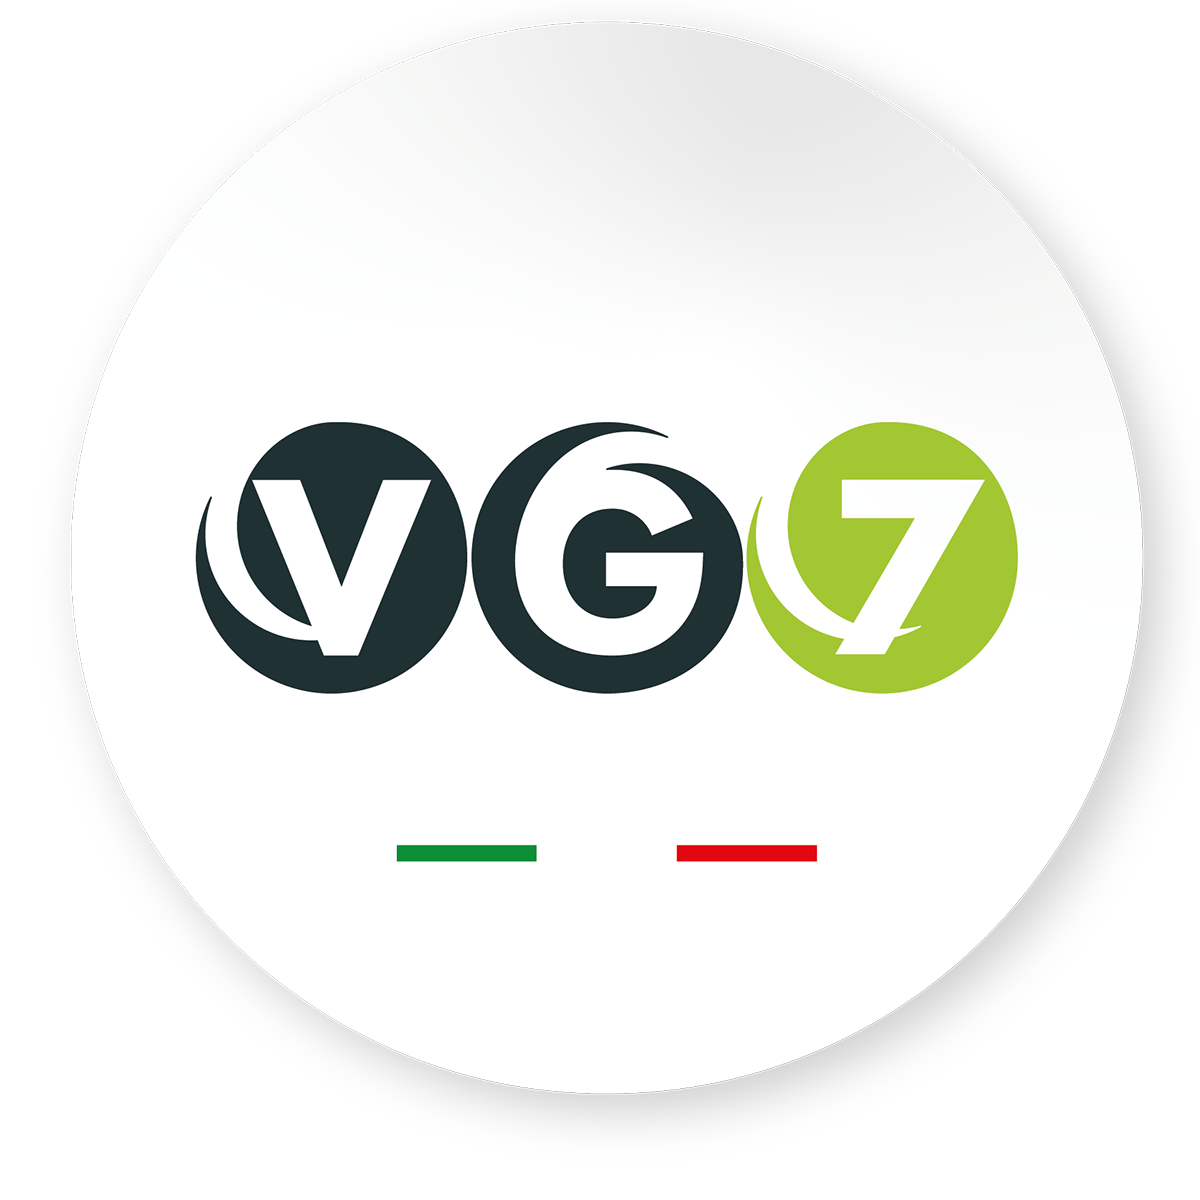 VG7 by Vampigroup